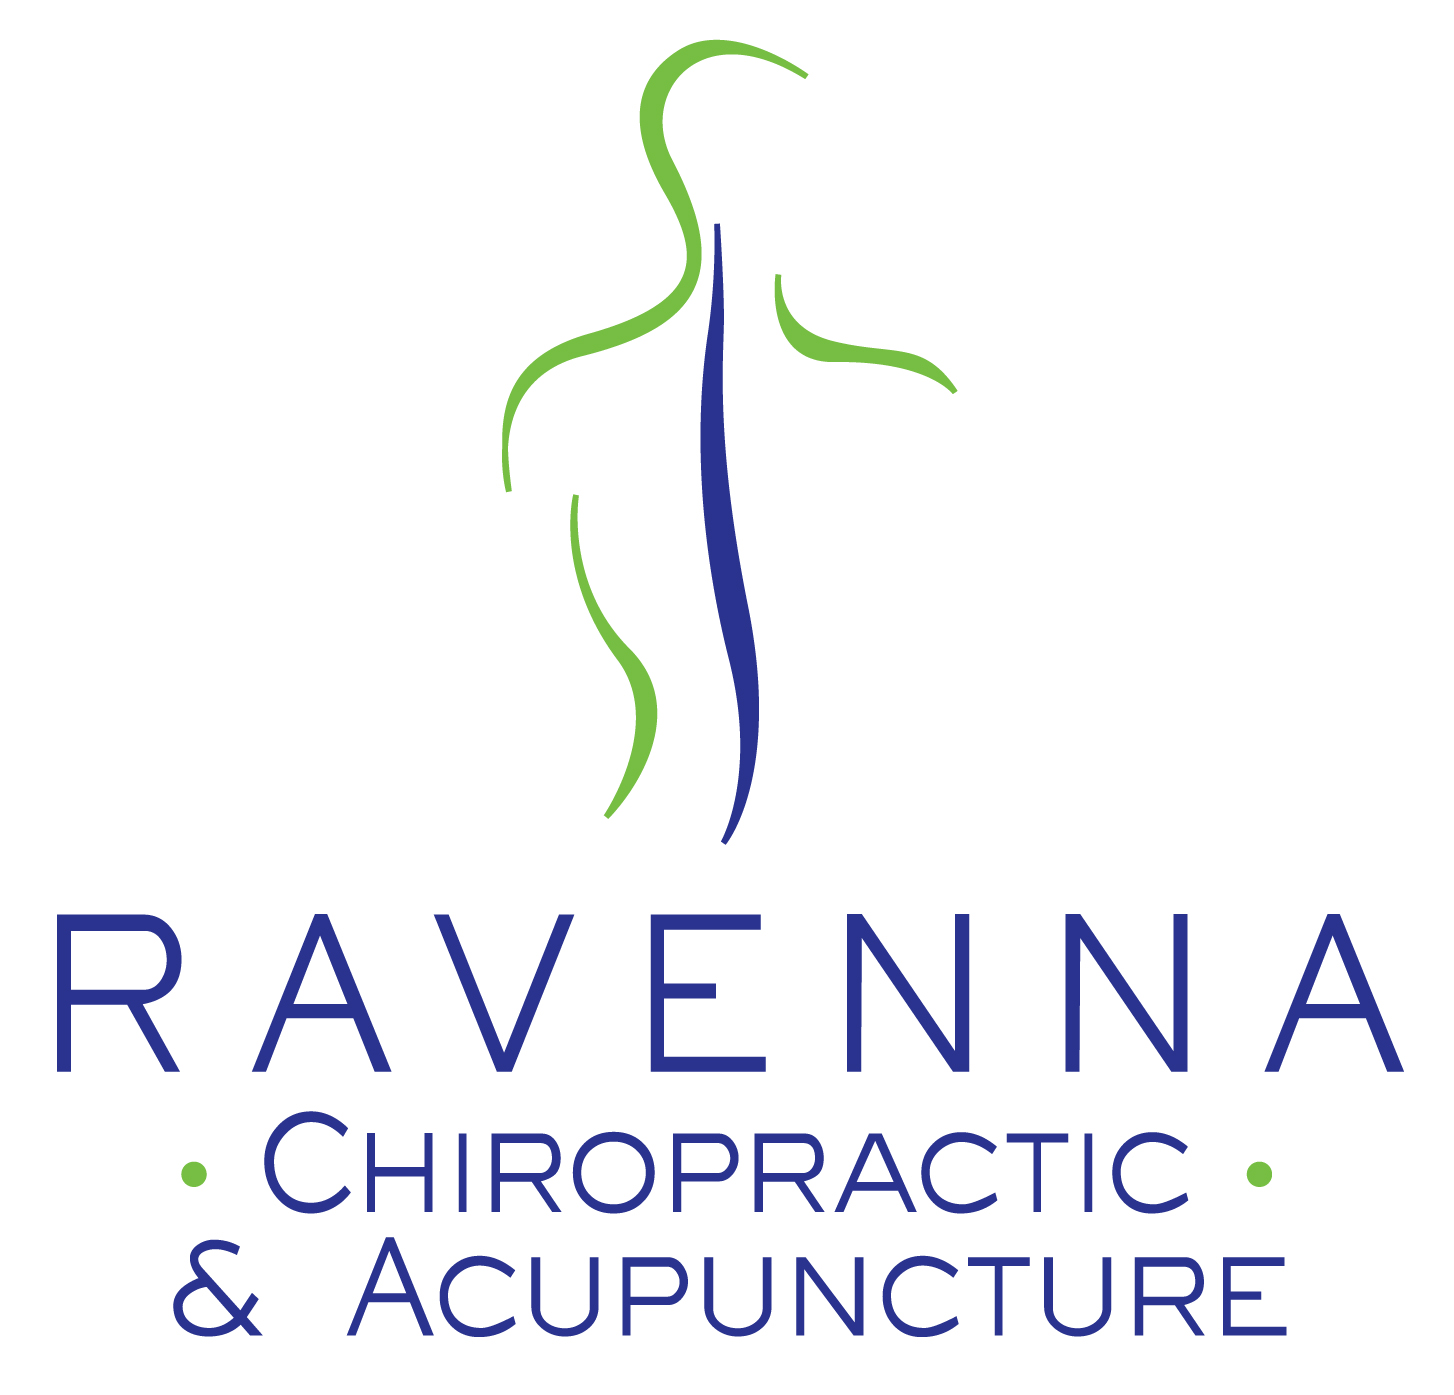 Ravenna Chiropractic & Acupuncture